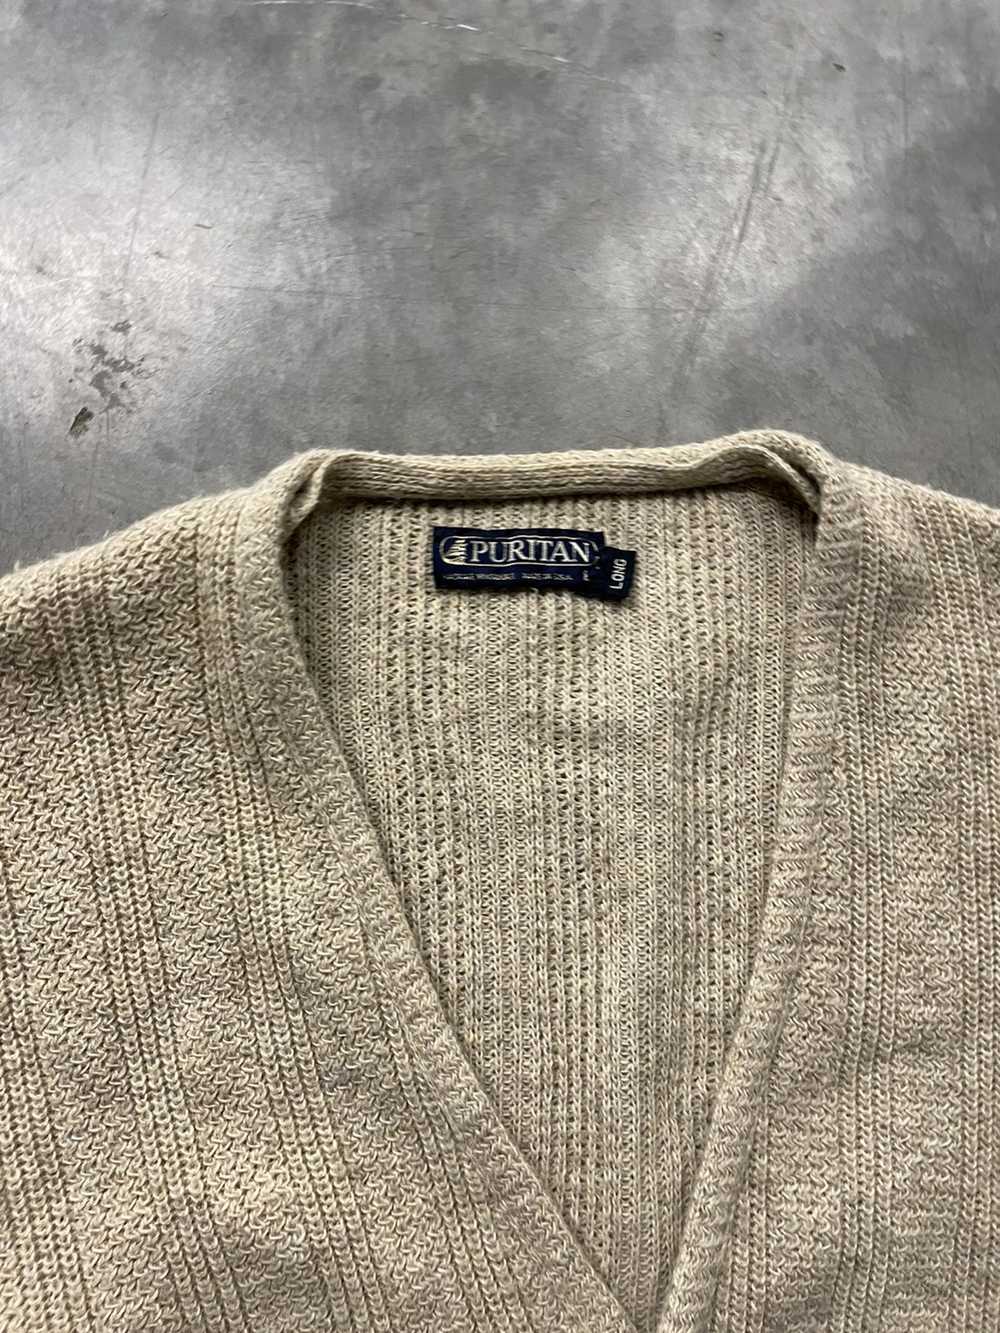 Vintage Vintage 70s Knit Cardigan Sweater - image 2